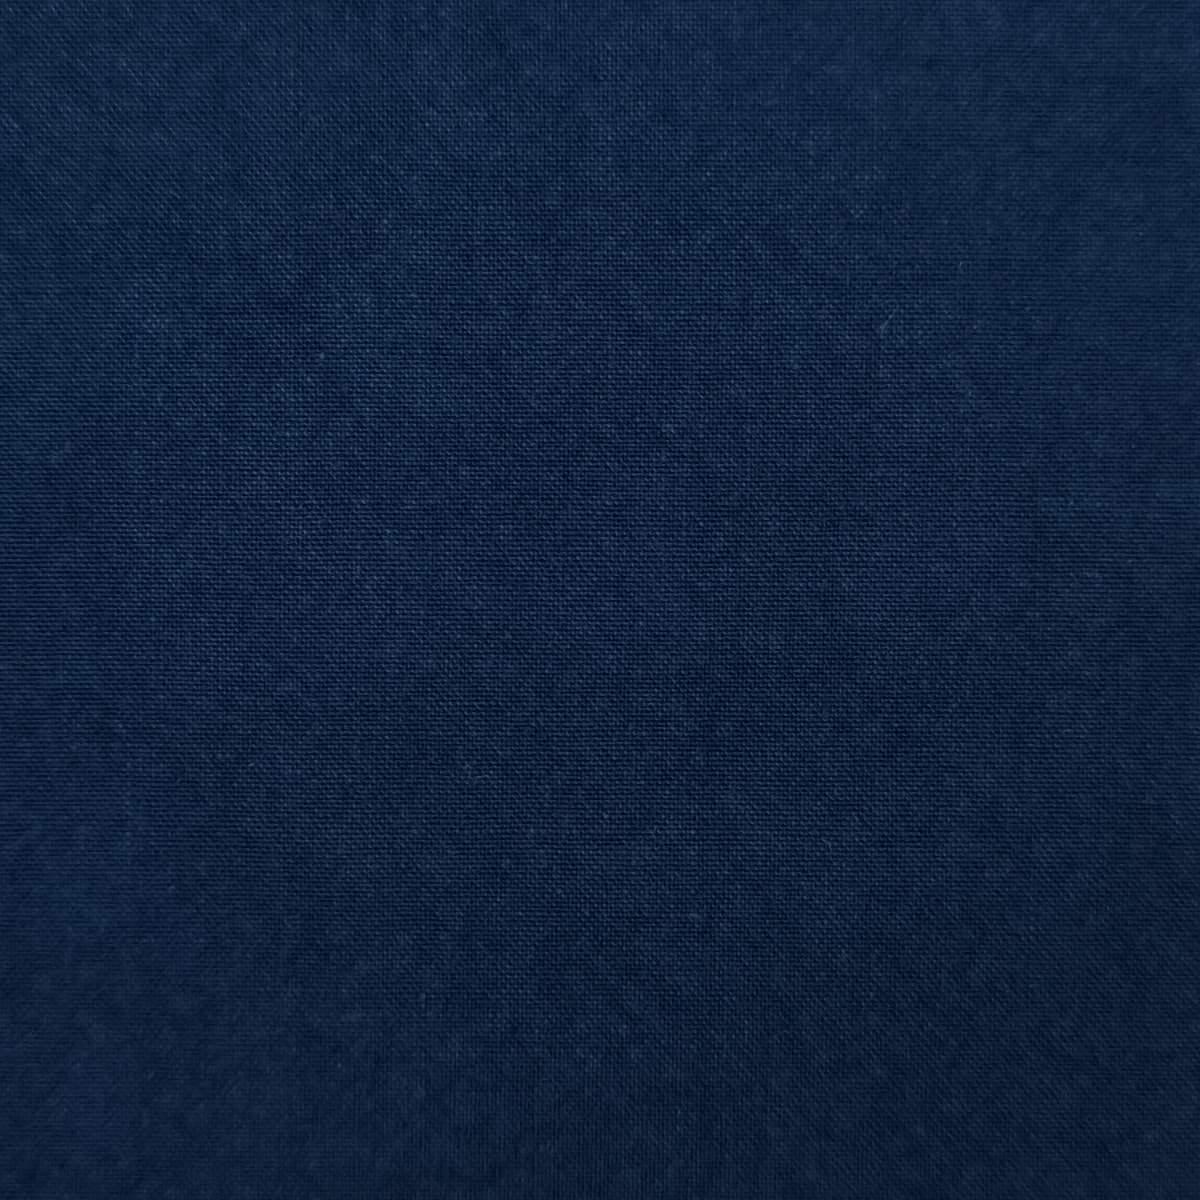 Cotton Woven Fabric-Catalina Blue